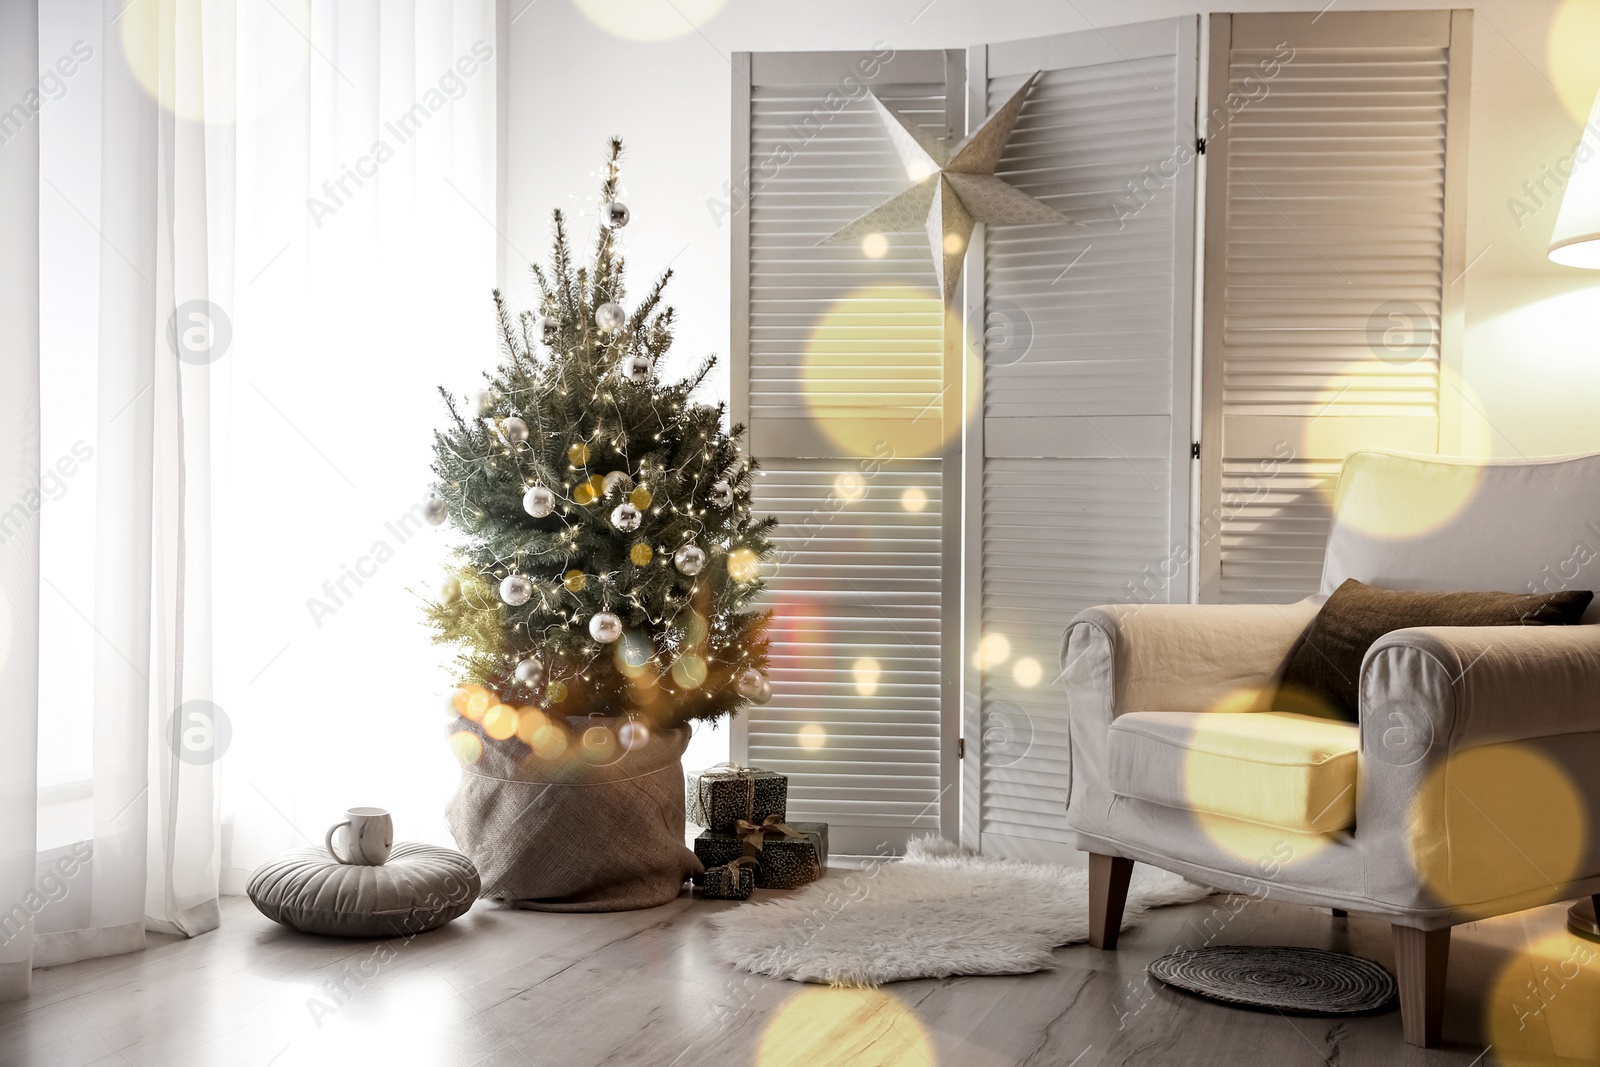 Image of Stylish room interior with elegant Christmas decor